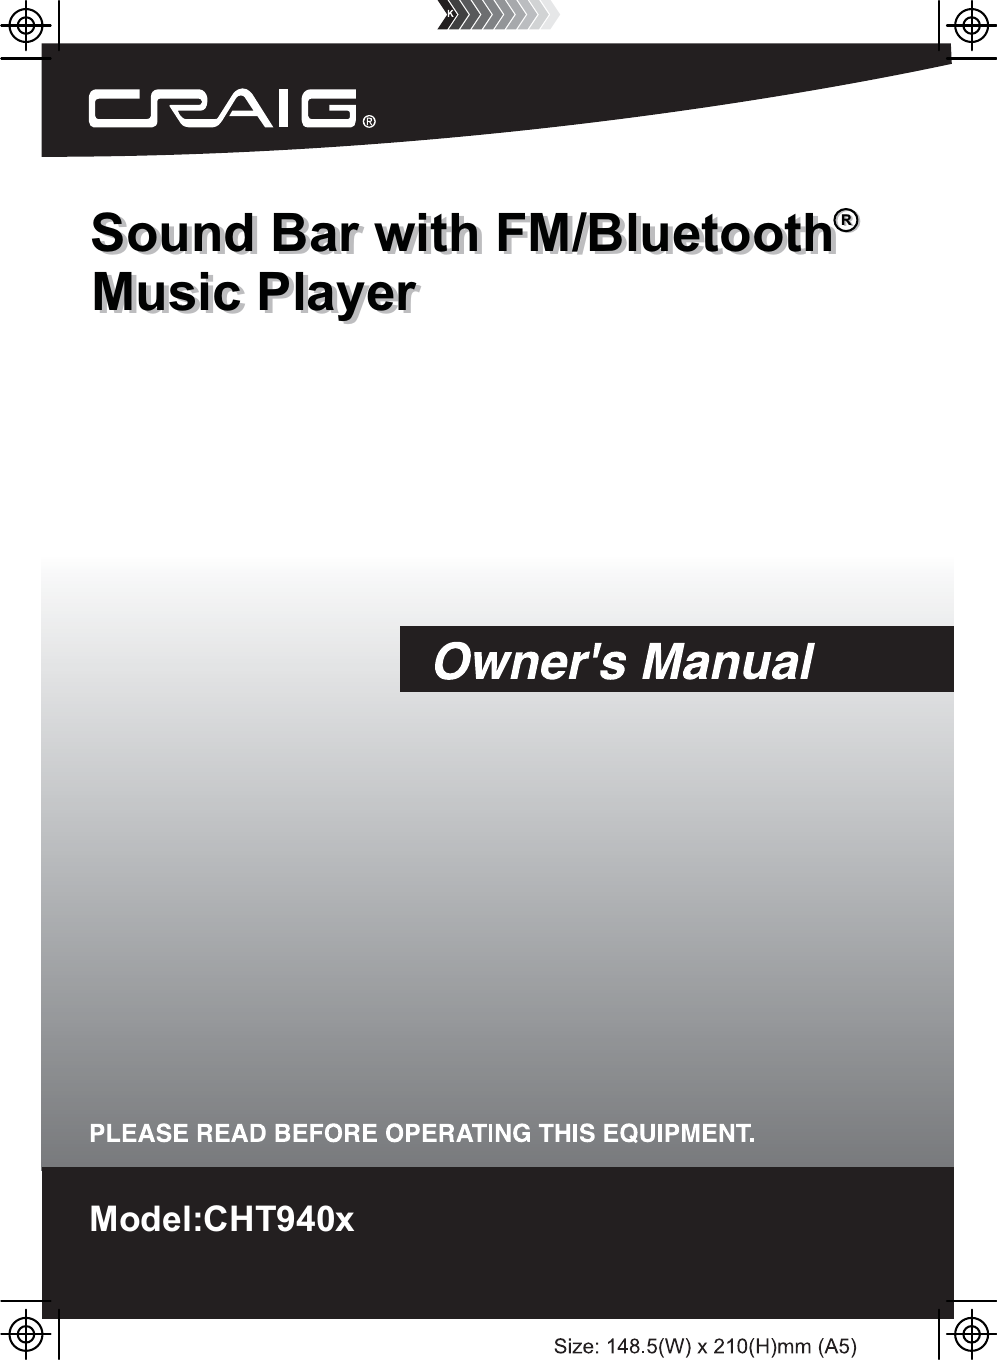 Model:CHT940xSound Bar with FM/BluetoothMusic PlayerSound Bar with FM/BluetoothMusic PlayerRR